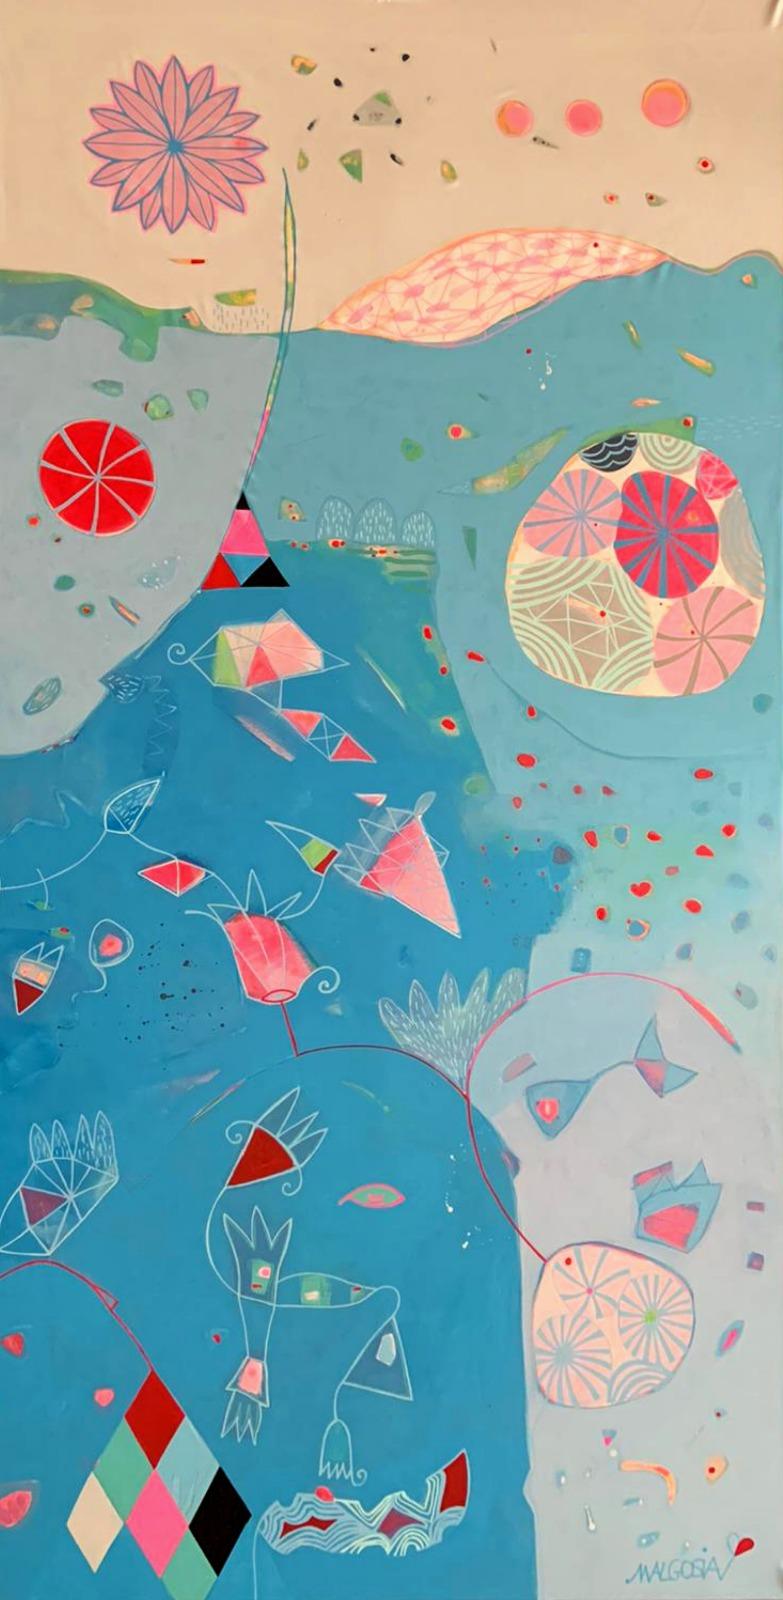 Malgosia Kiernozycka Abstract Painting - Aquarium Blue Abstract